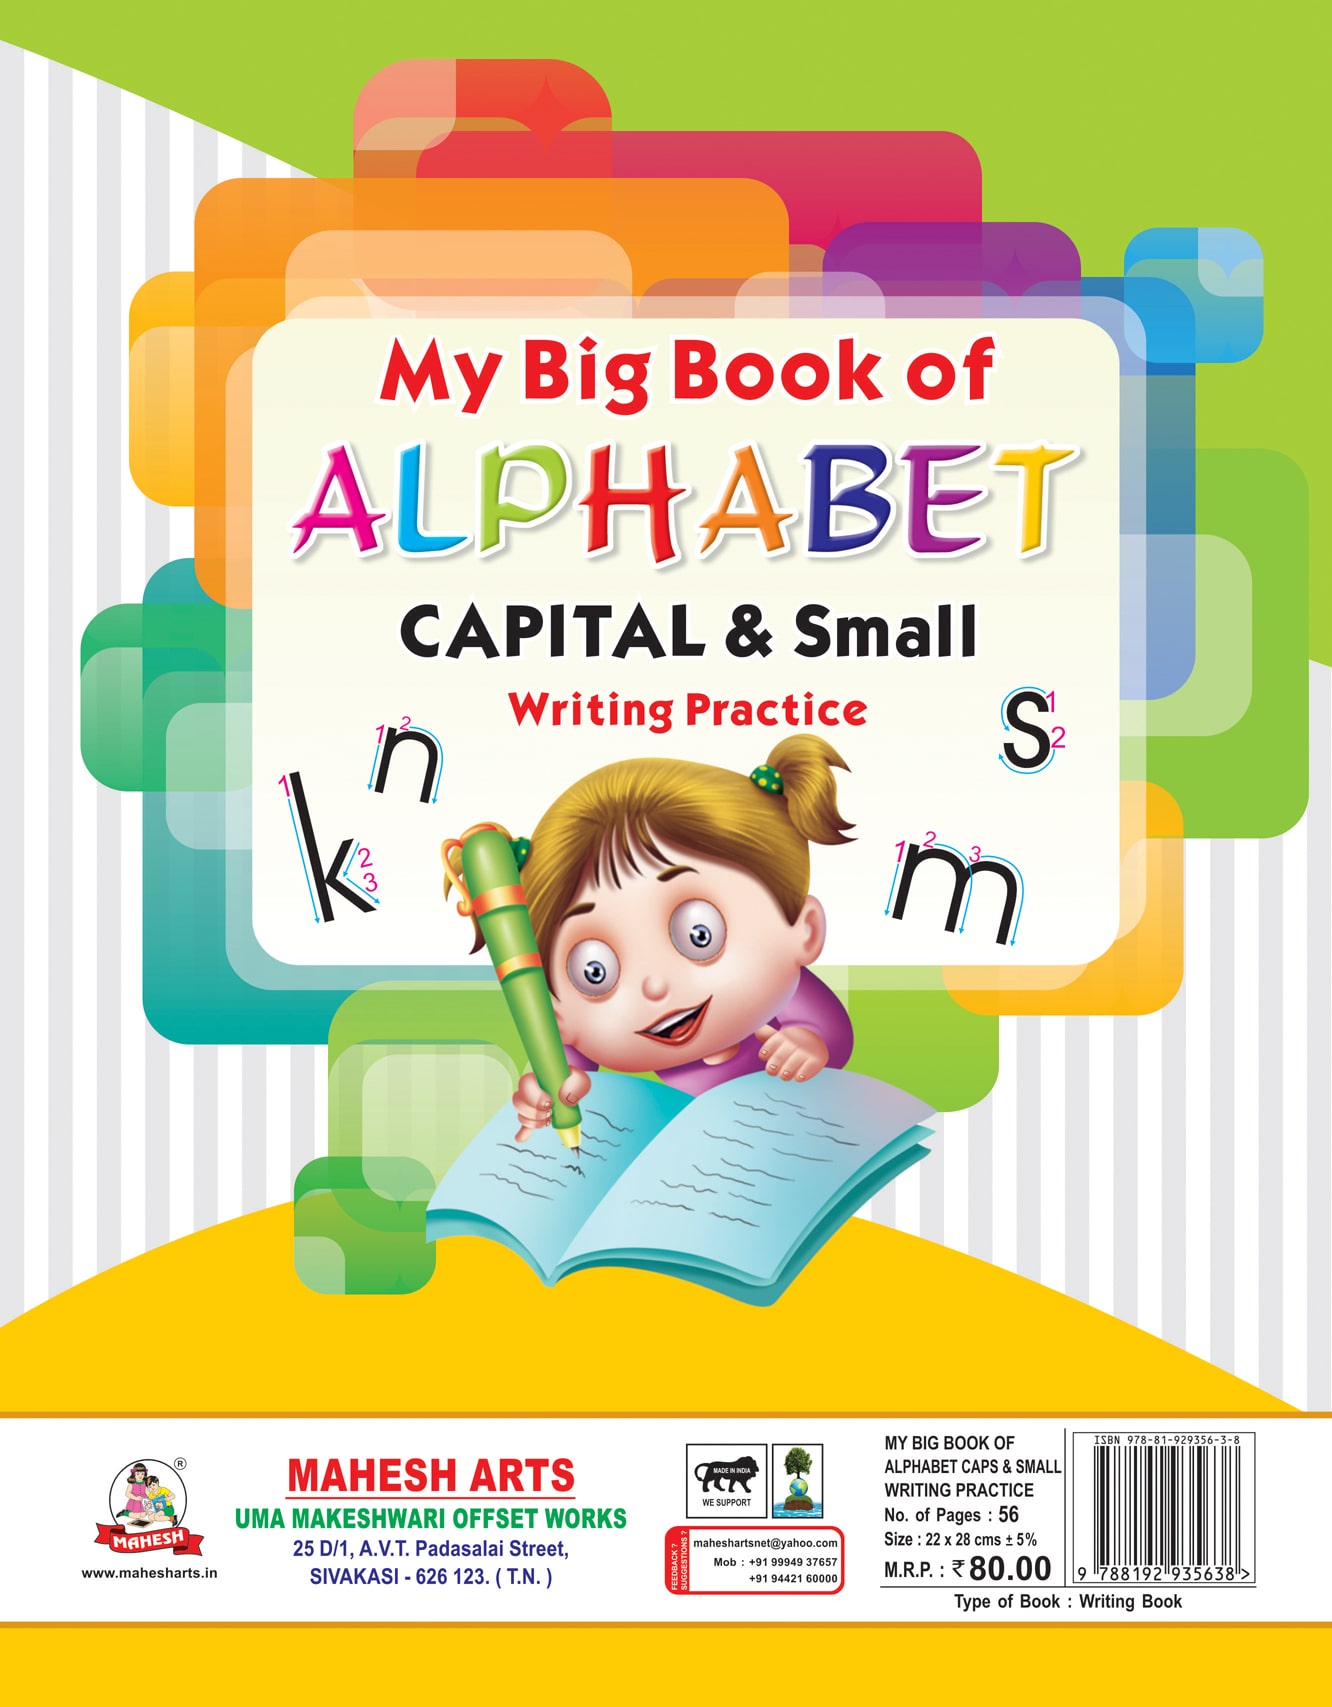 My Big Book of Alphabet